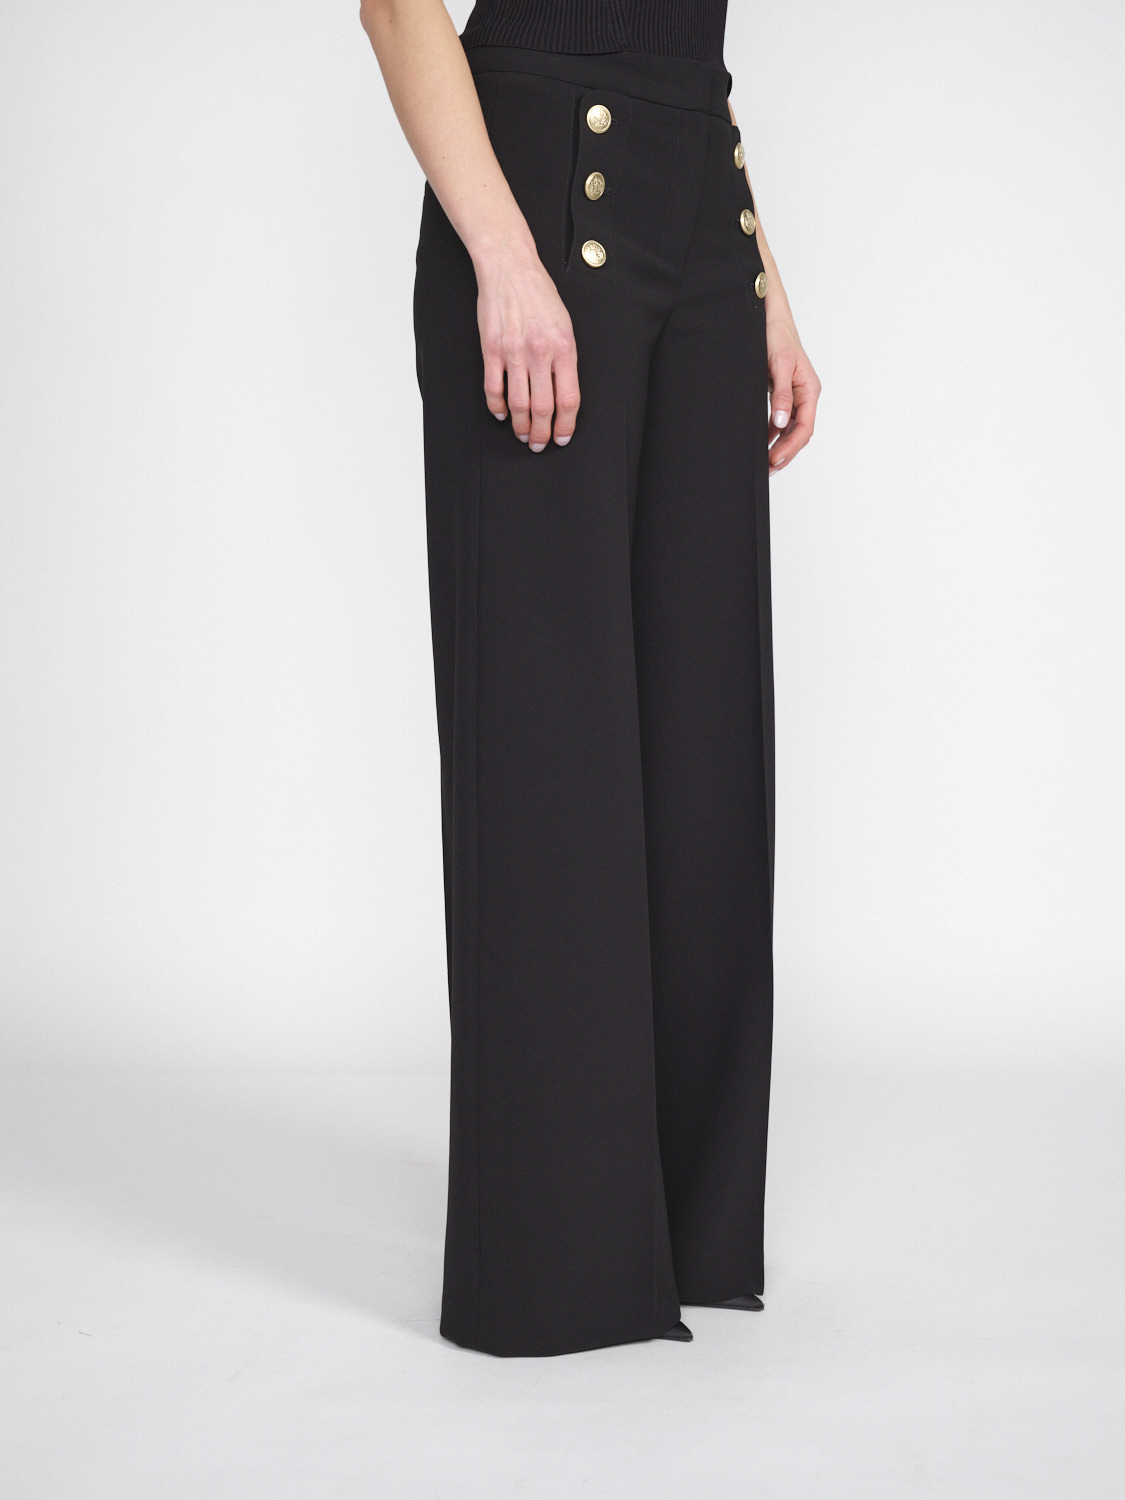 Seductive Bridget - Stretchy trousers with gold button details  black 36